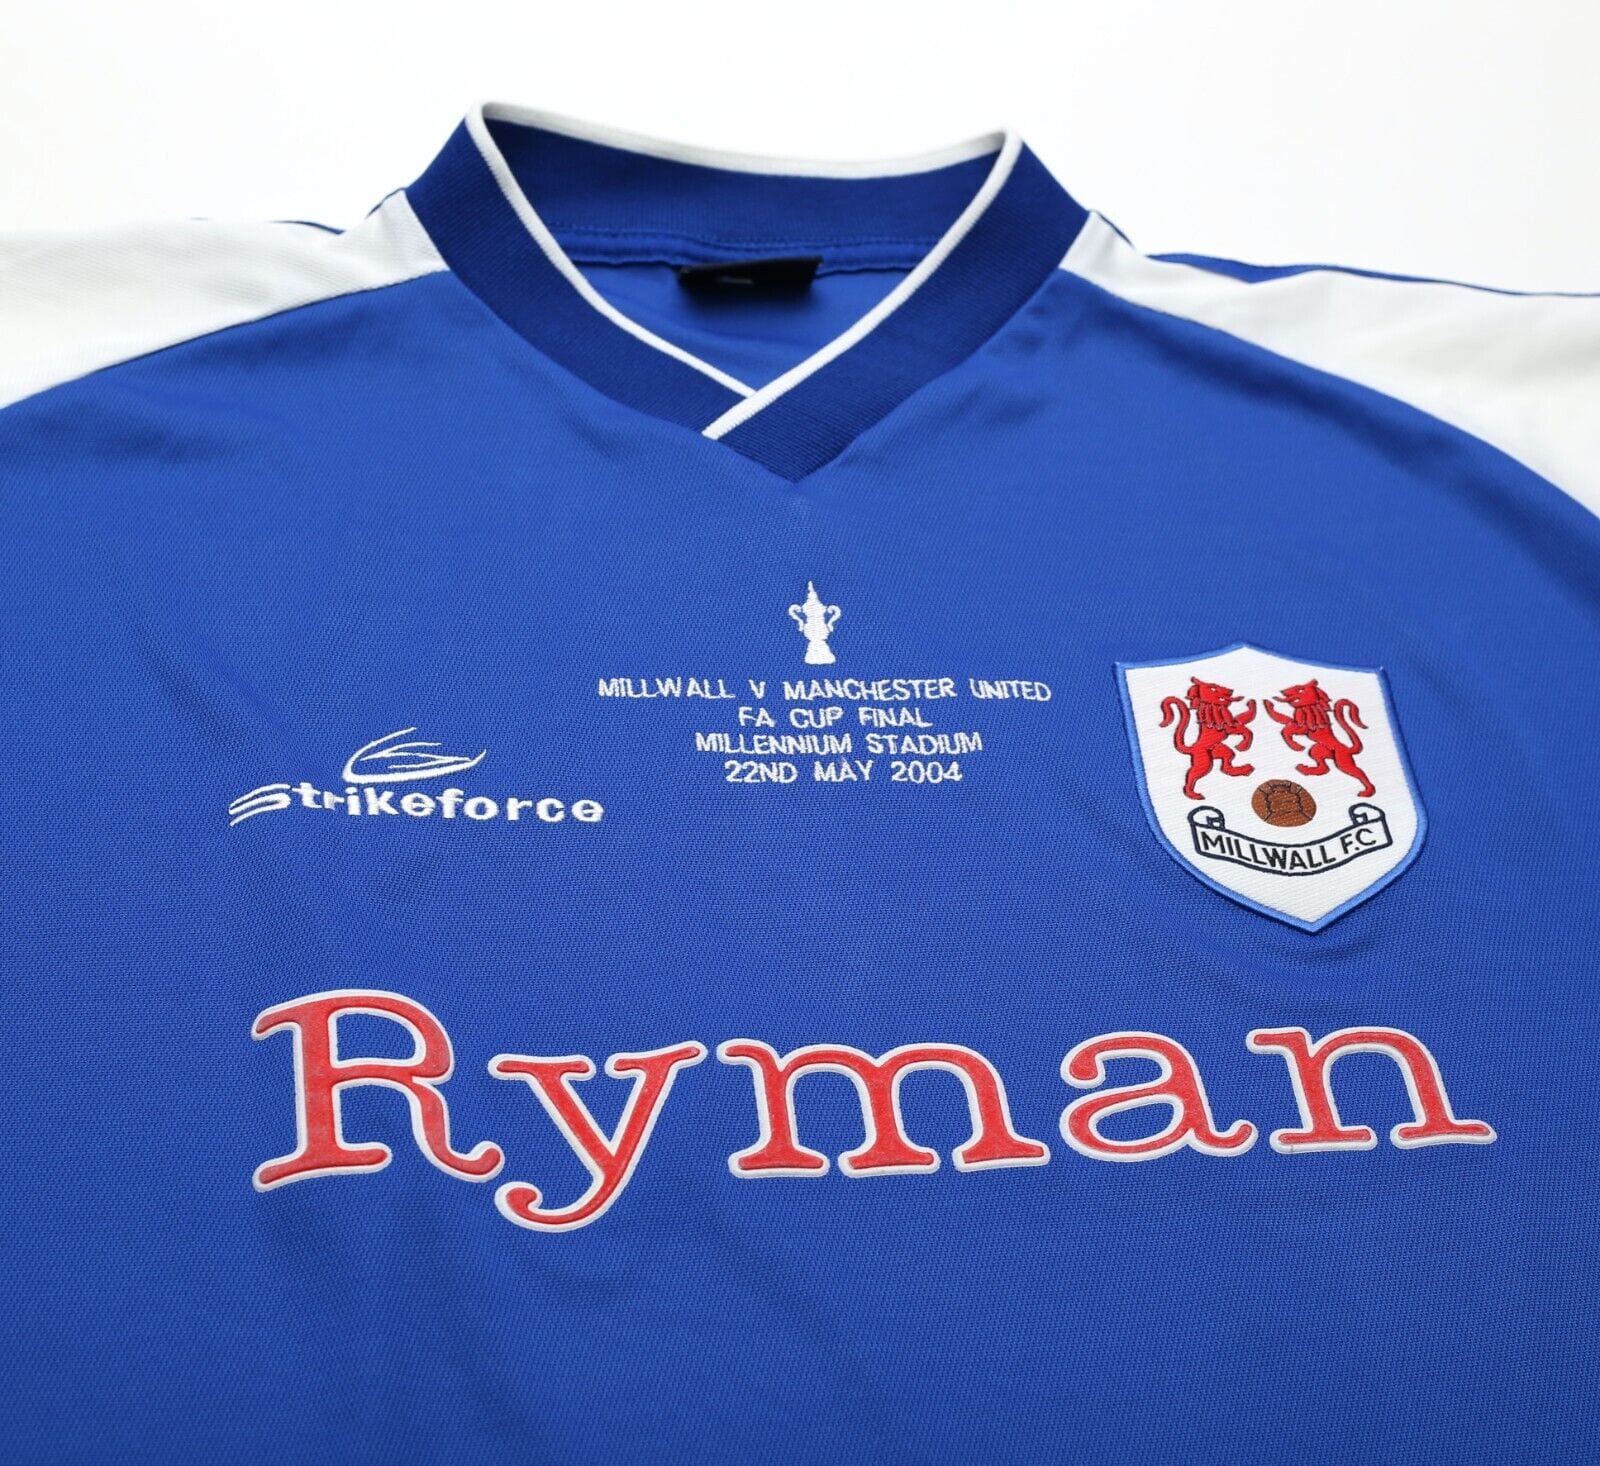 2003/04 MILLWALL Vintage Strikeforce FA Cup Final Home Football Shirt Jersey XL